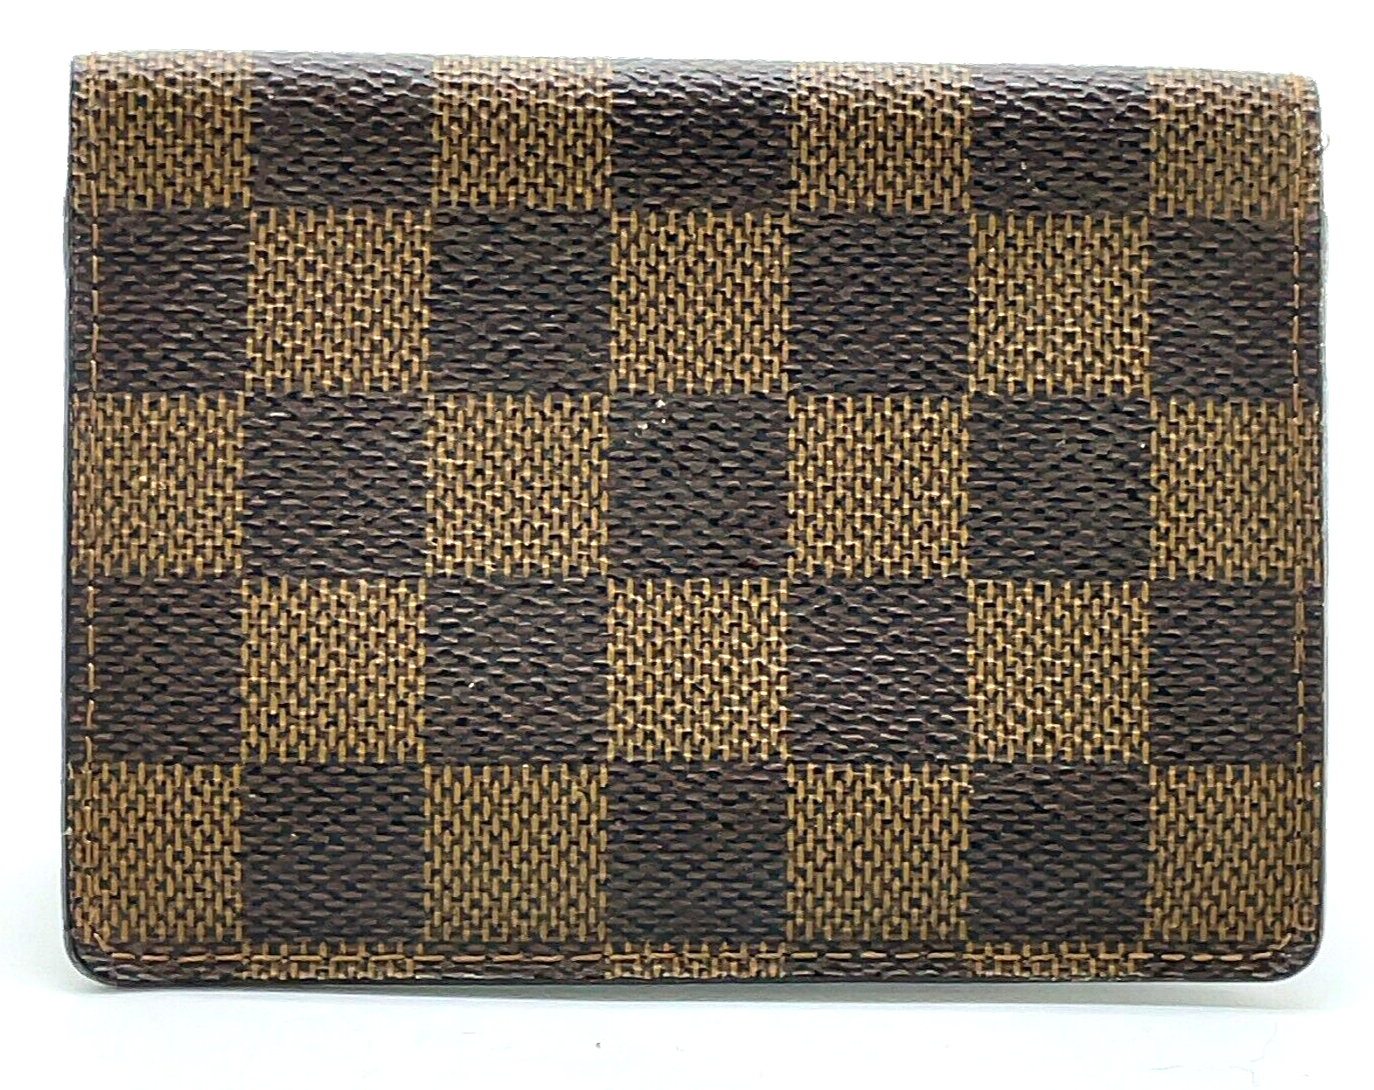 Original/Auth Louis Vuitton - 2 Karten Porte Wallet - Klassisch - Damier Ebene